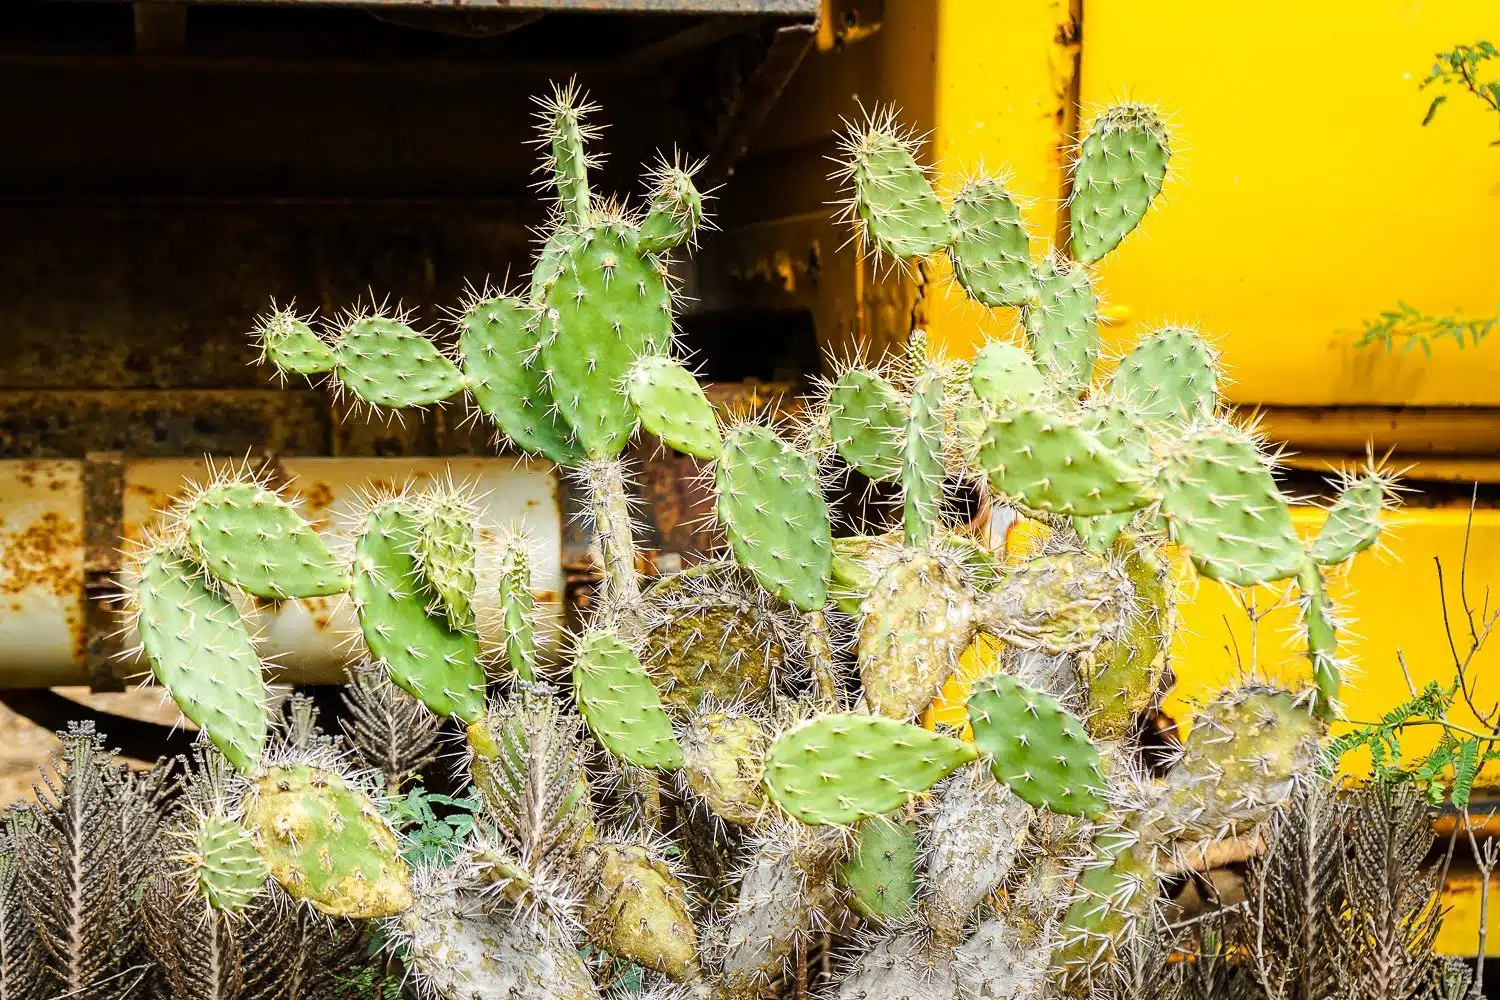 Cacti close up -- fuzzy yet spiky.